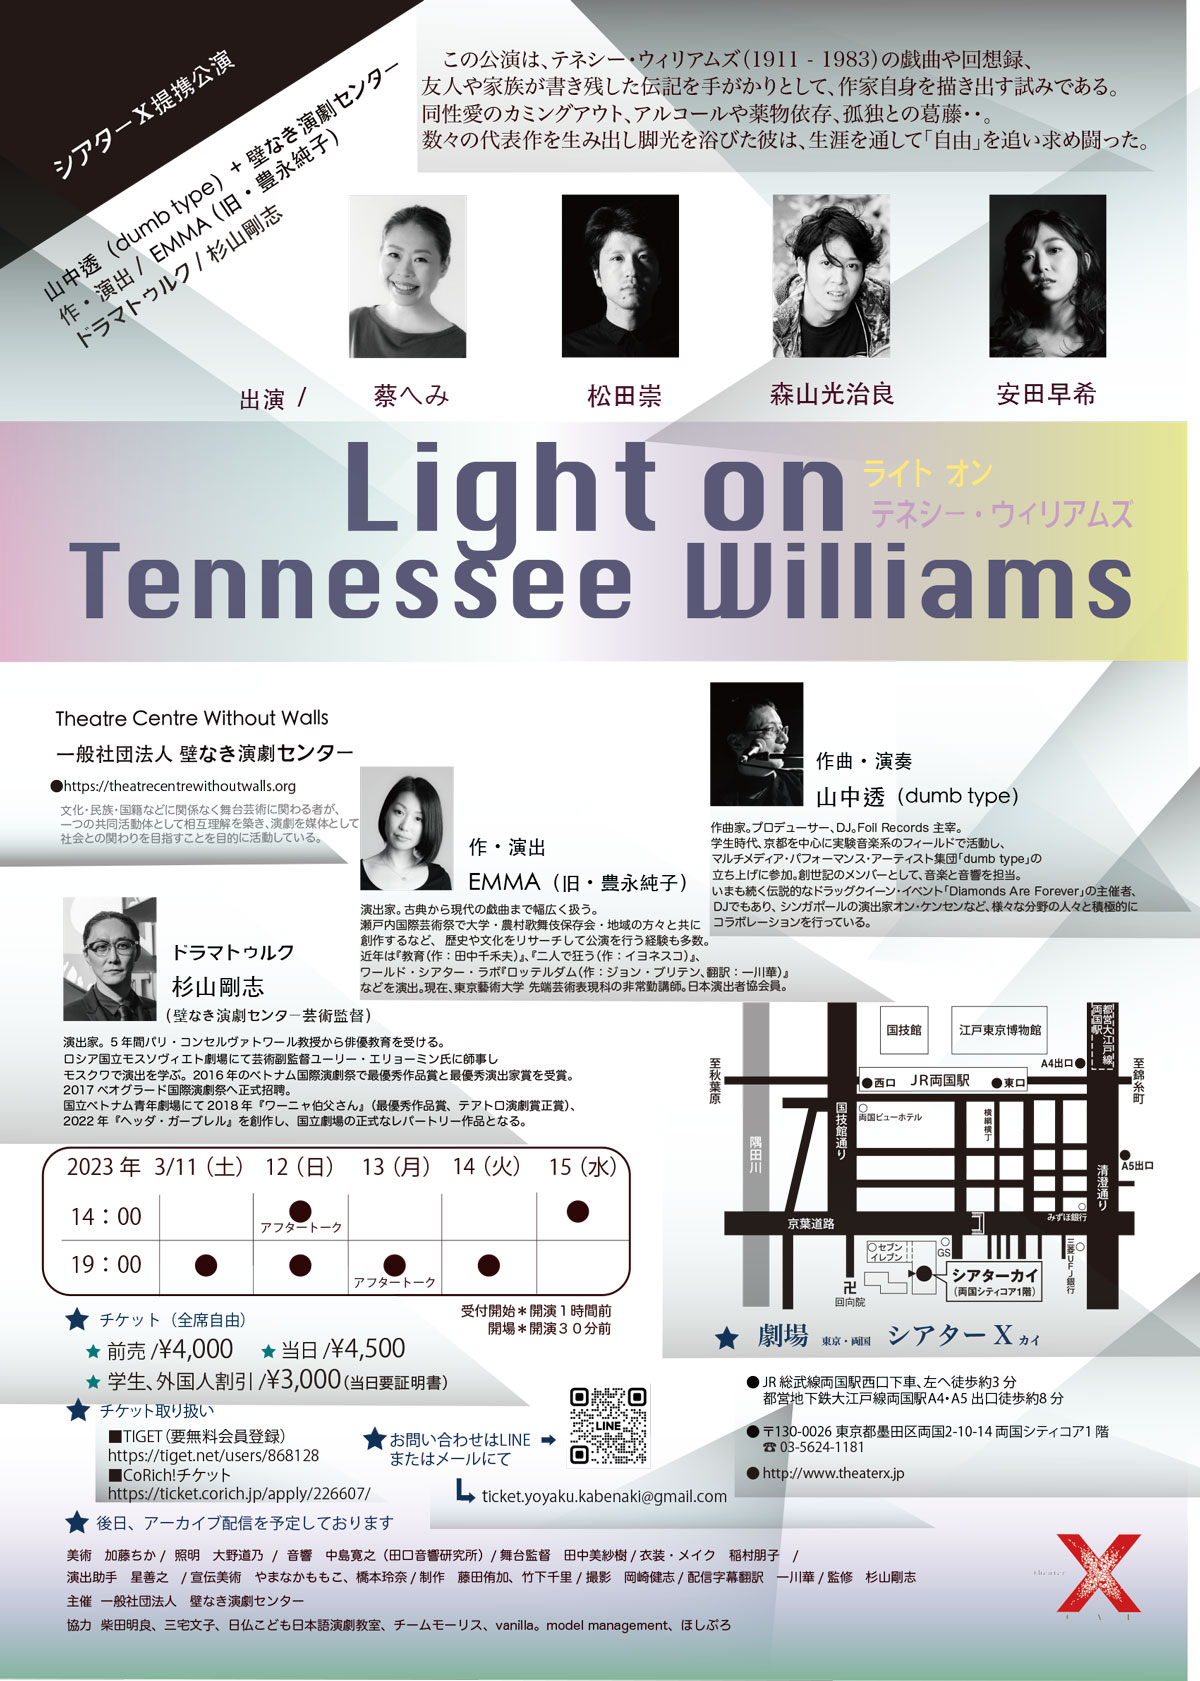 『Light on Tennessee Williams』公演情報